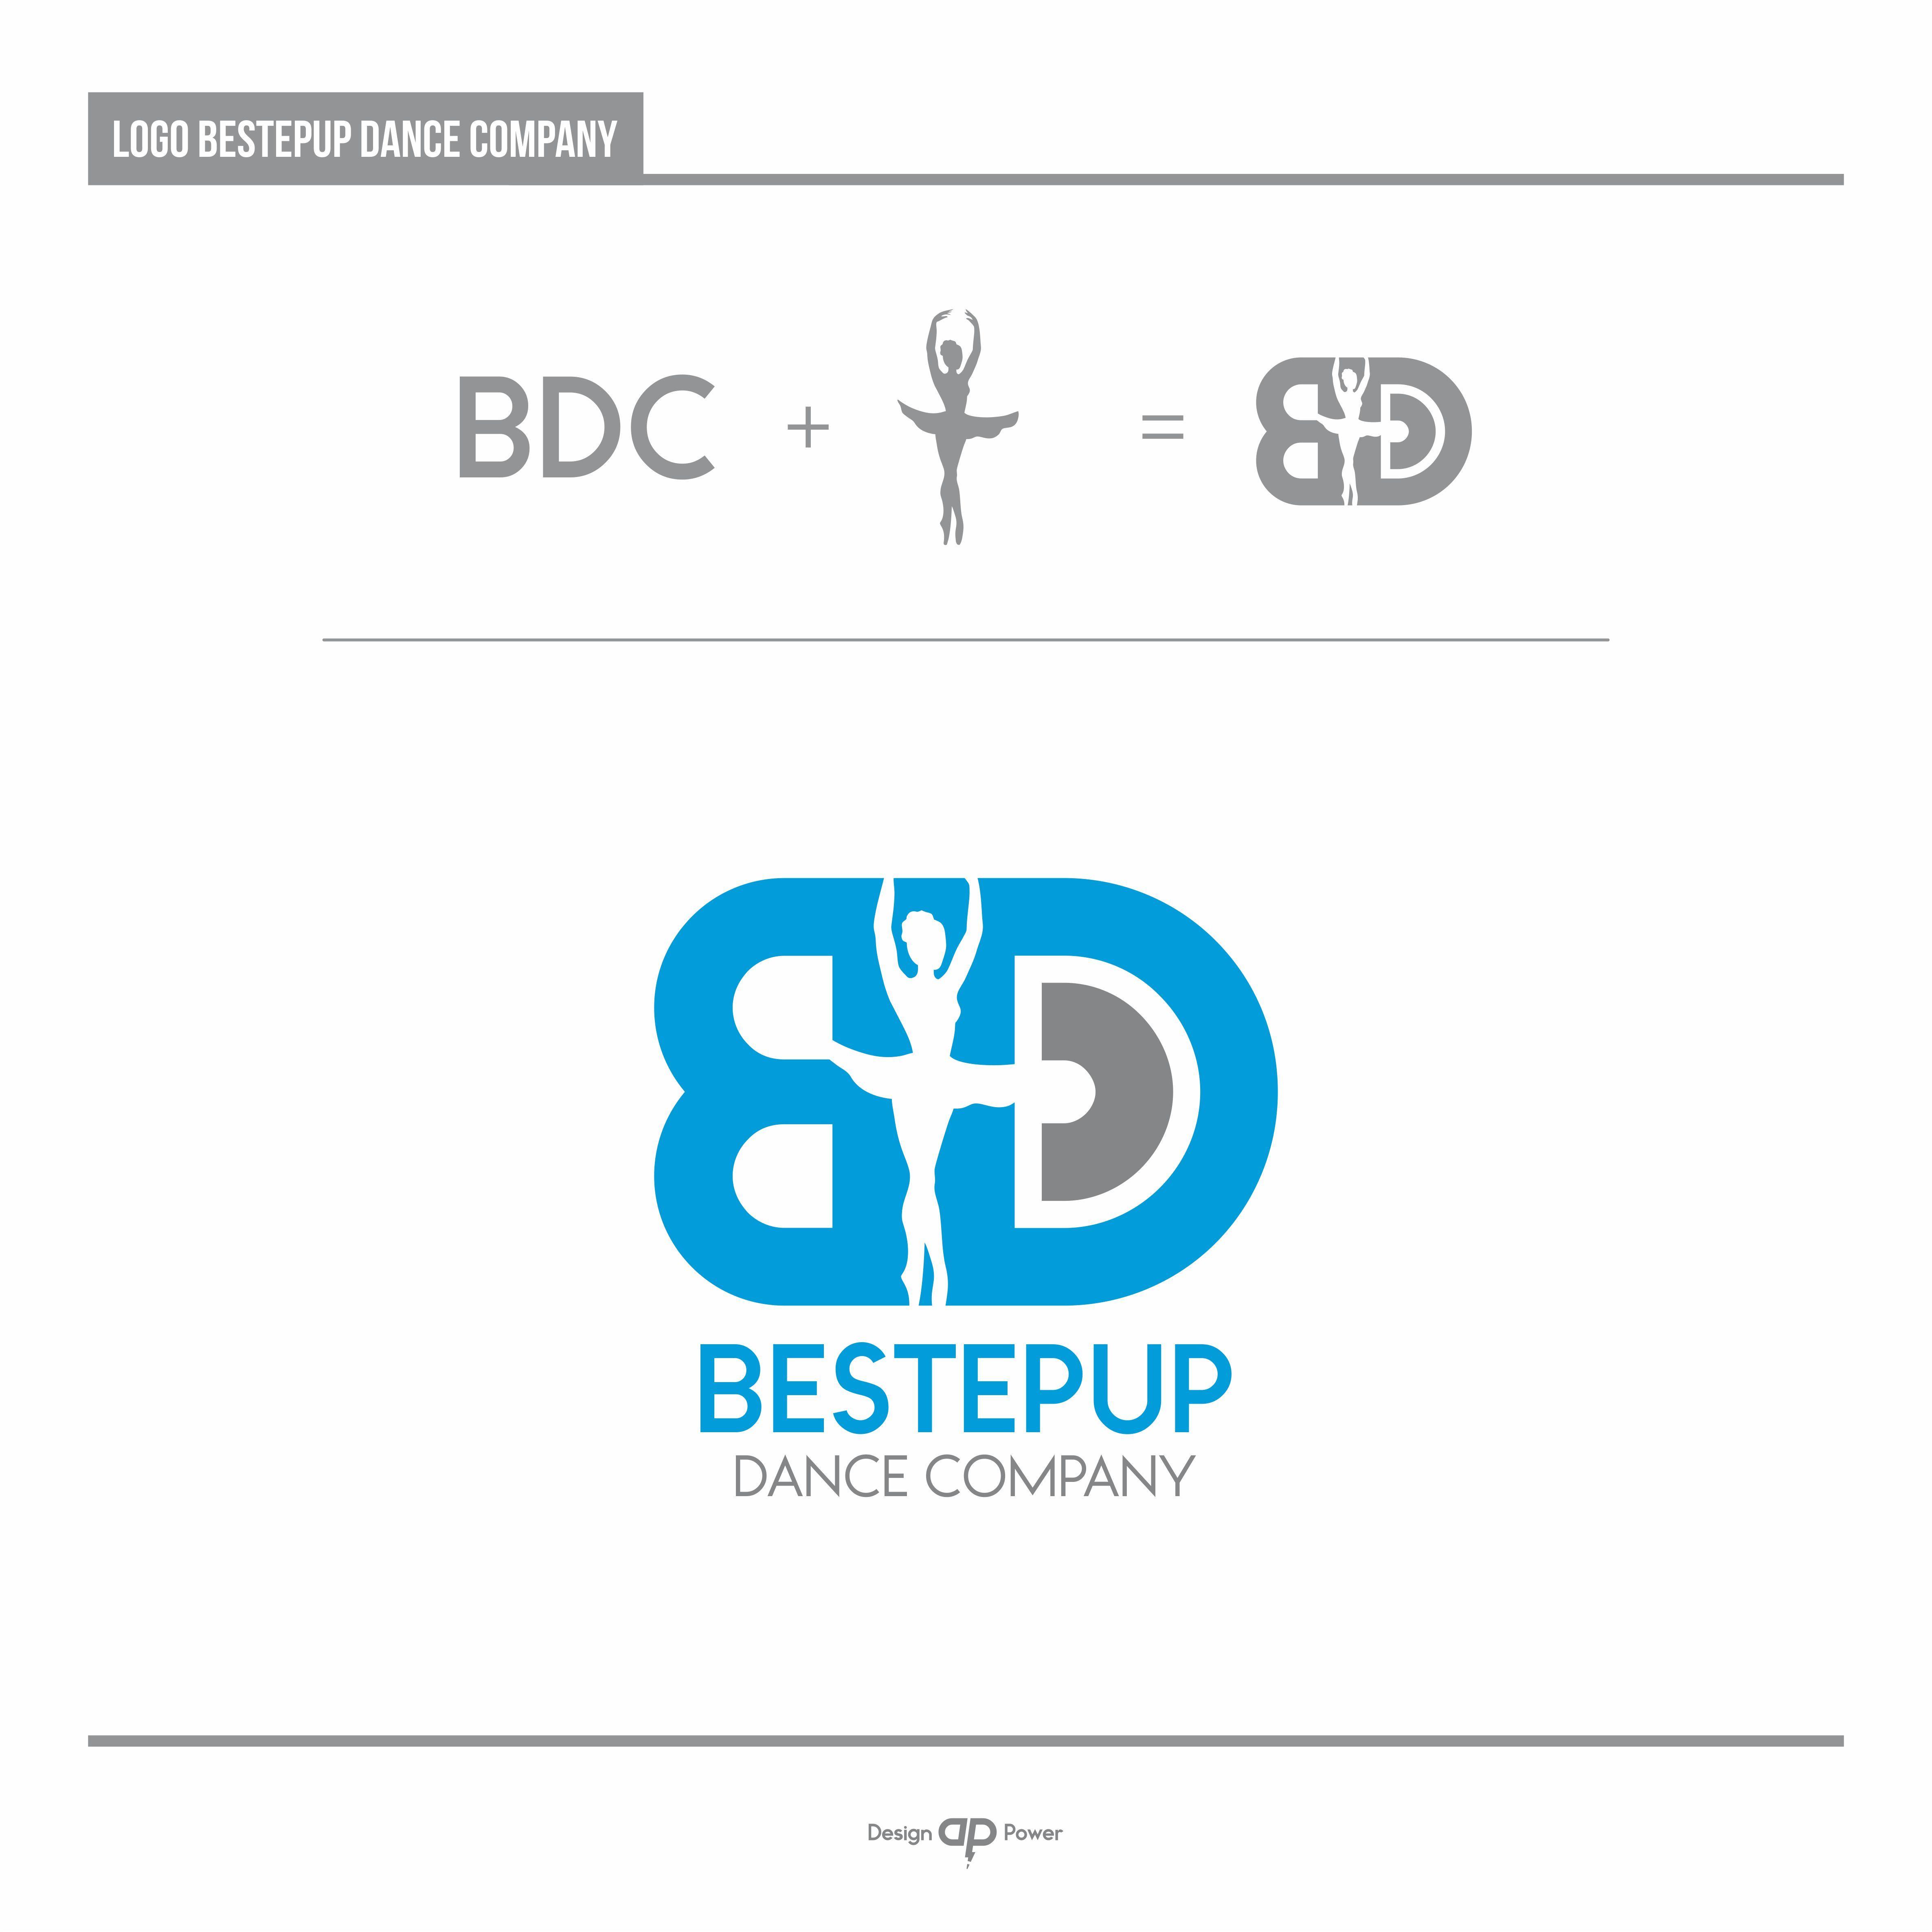 BDC Logo - Logo and Business Card Design. 'BDC Bestepup Dance Company